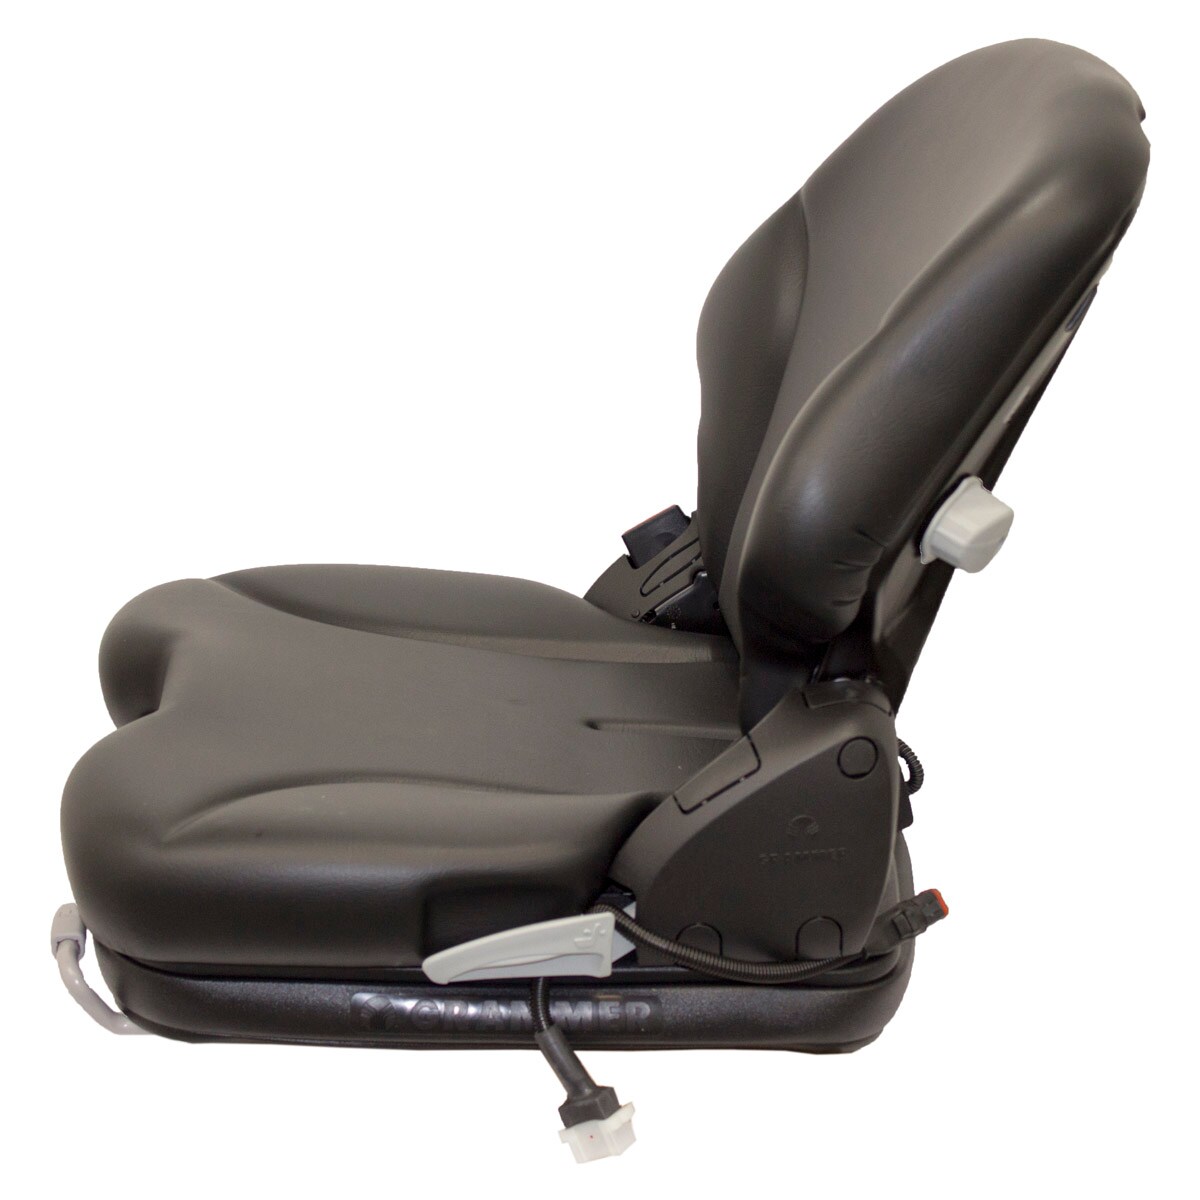 KM 450 Uni Pro Riding Lawn Mower Seat - Black Vinyl with Arms, Universal  Construct/Mower Seat, High-Density Foam Cushions